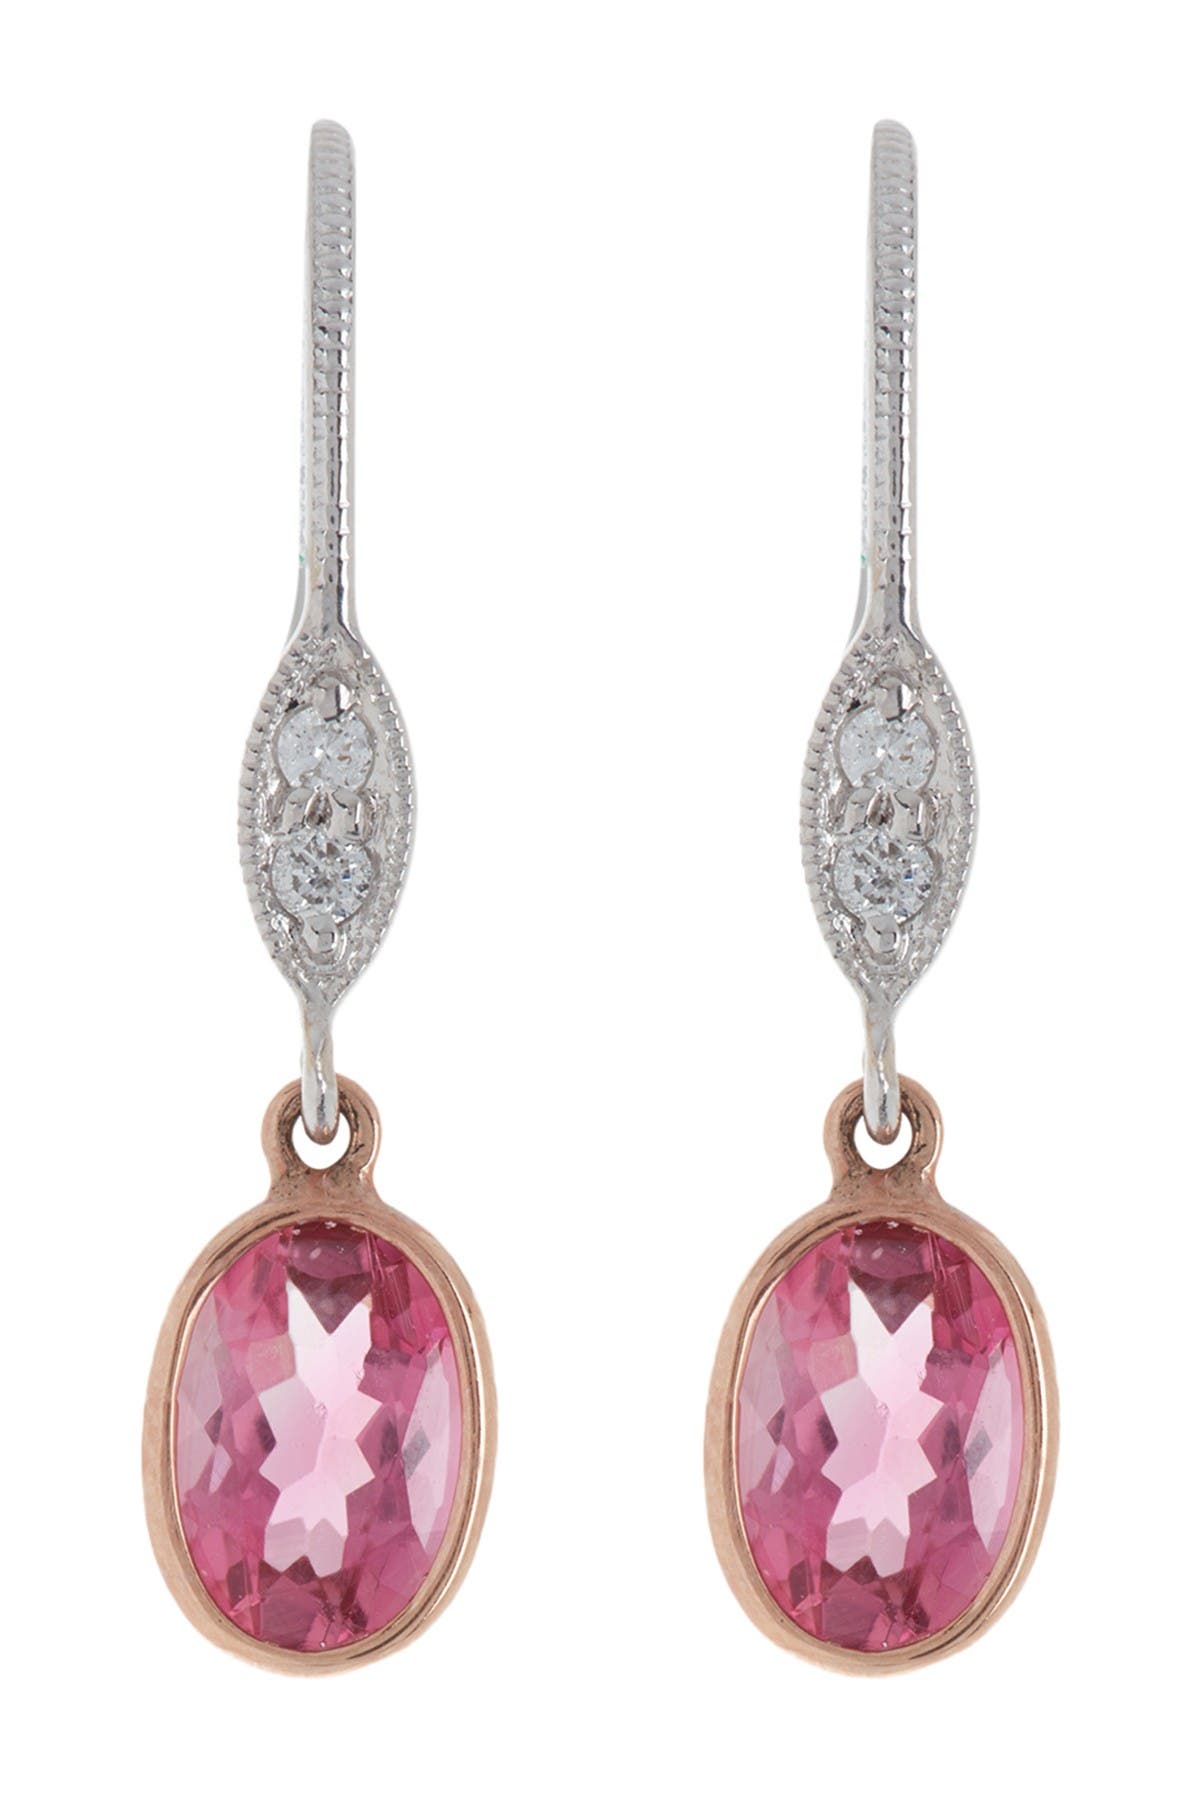 Meira T 14k Rose Gold Pink Tourmaline Drop Earrings